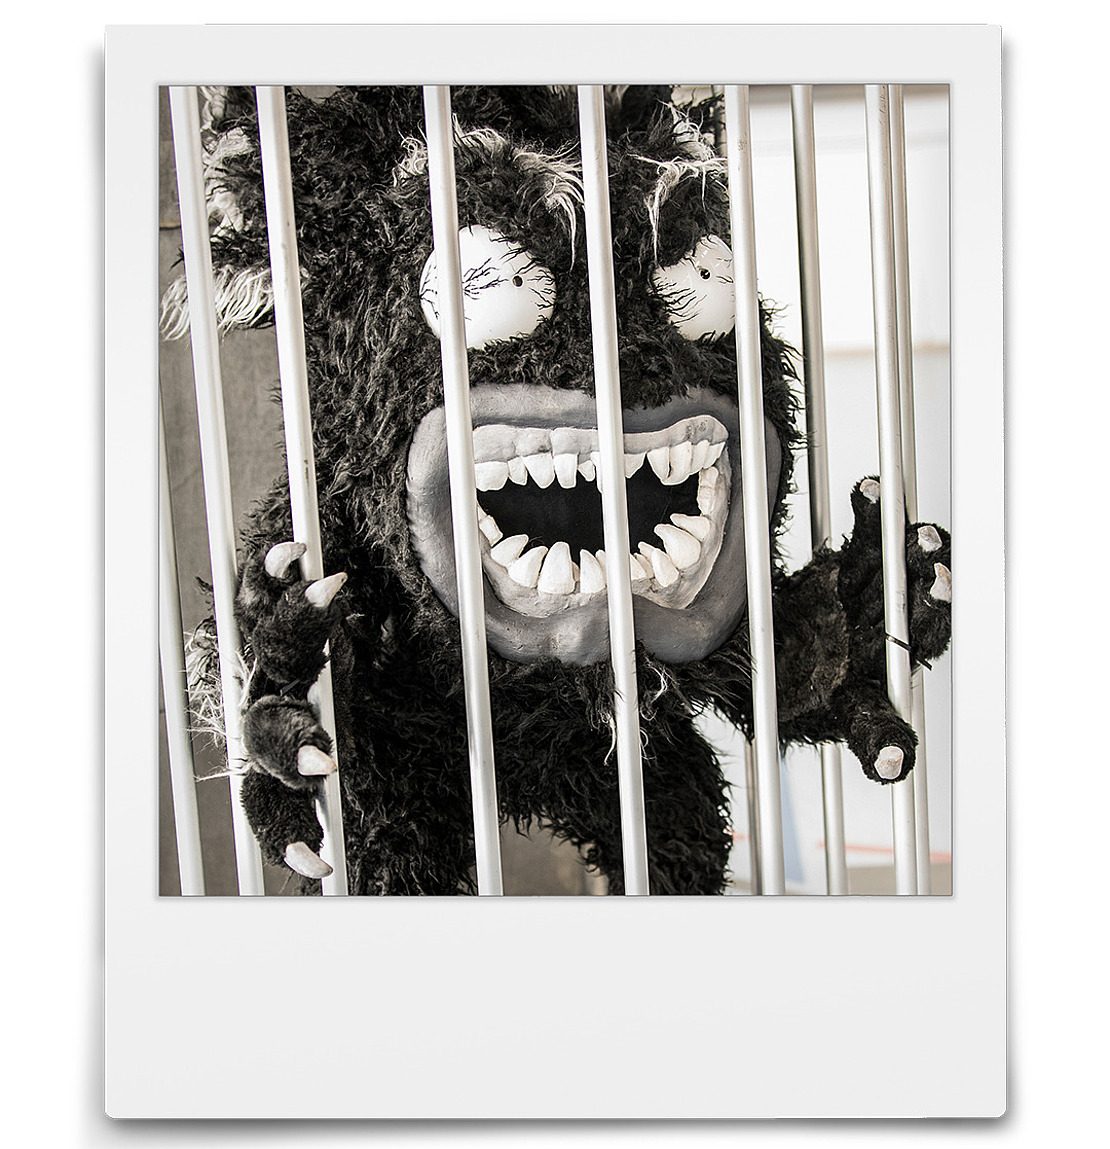 Das Mobbing-Monster hinter Gittern.